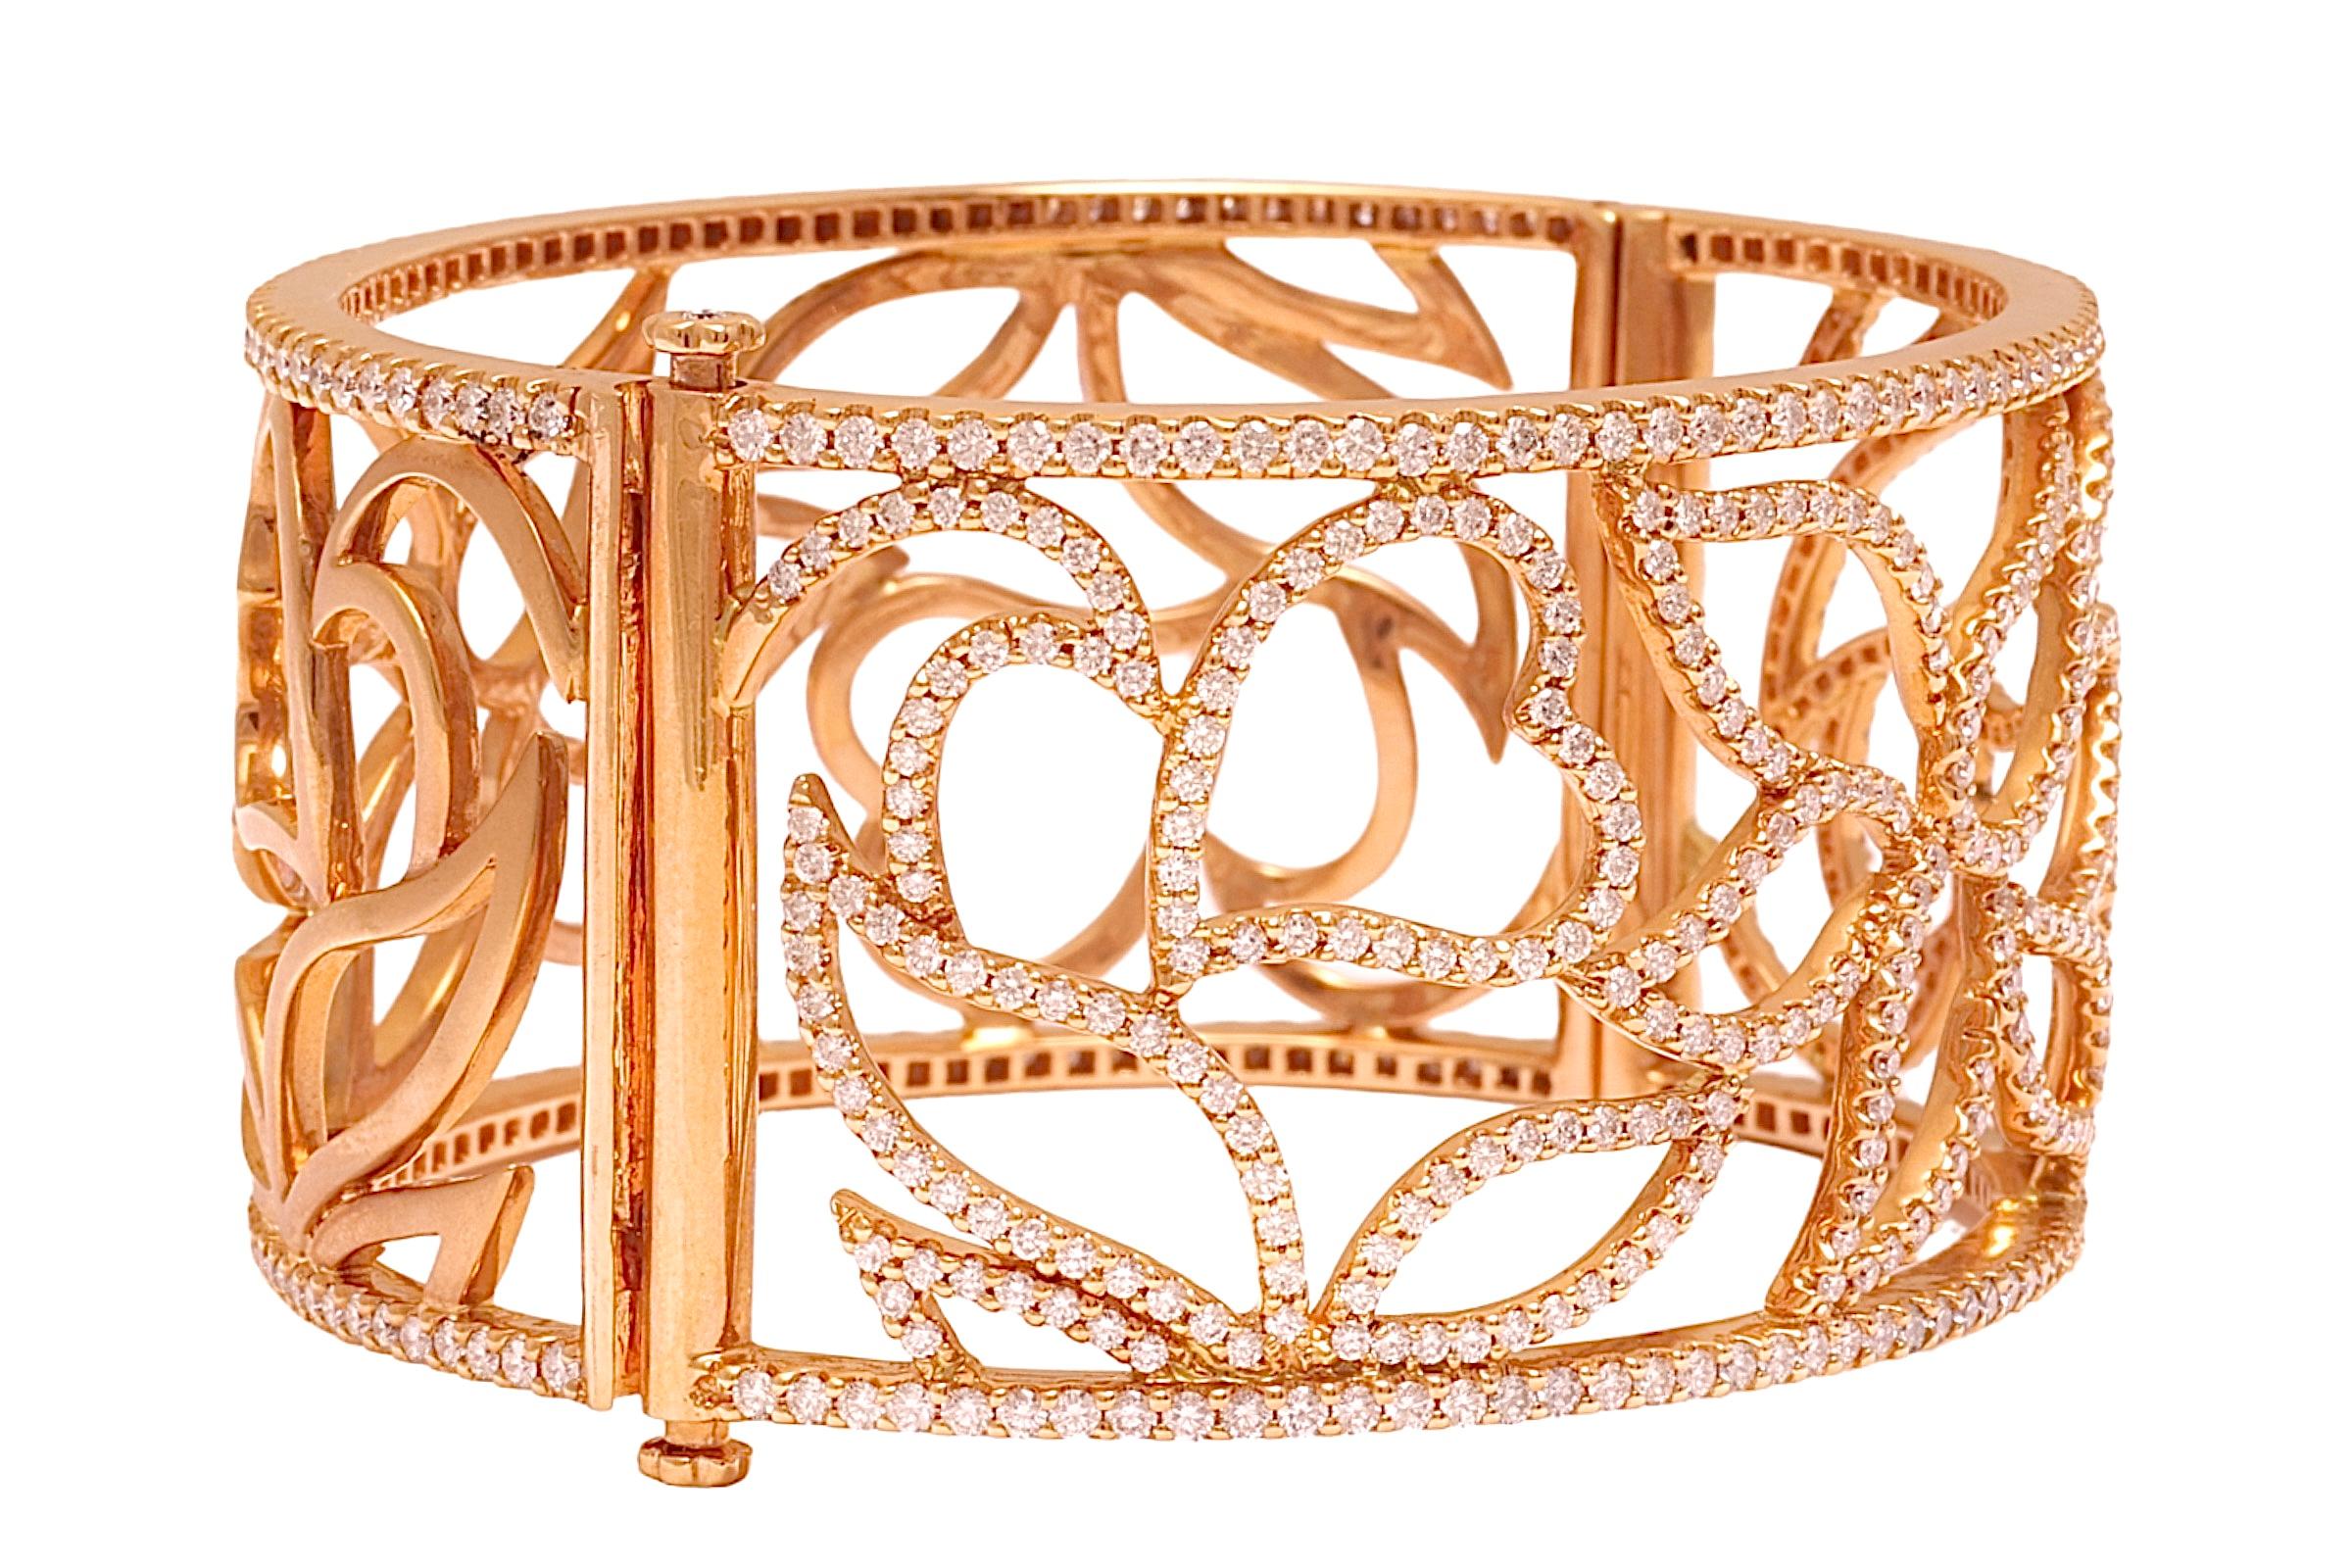 18kt Pink Gold Cuff Bracelet, Flower Design, set with 5.87 ct. Diamonds, 2 Sided For Sale 4